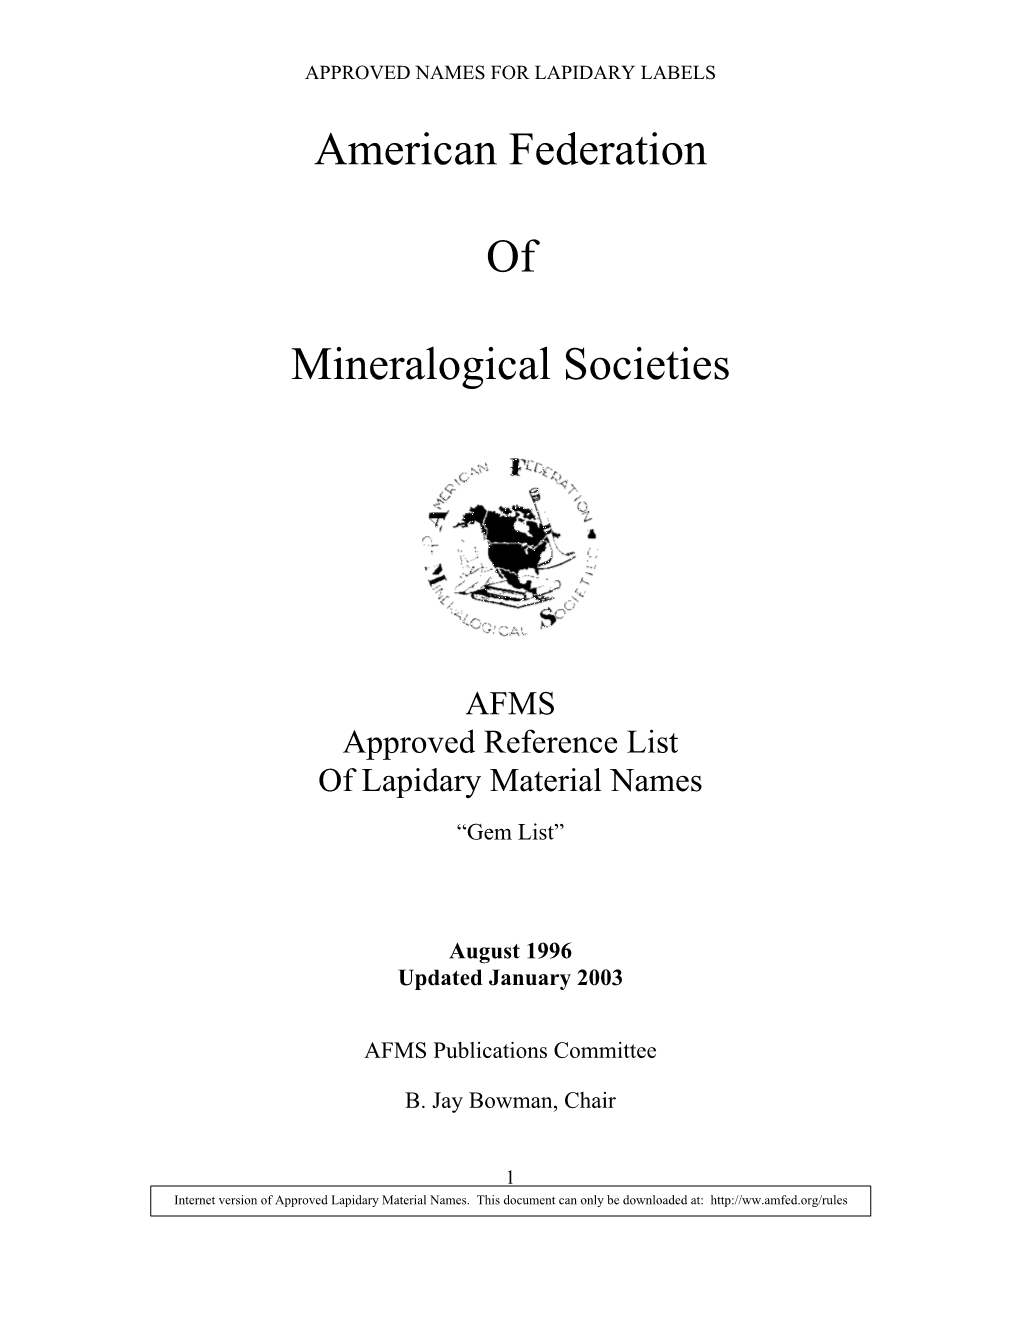 AFMS Lapidary Material Names 2003